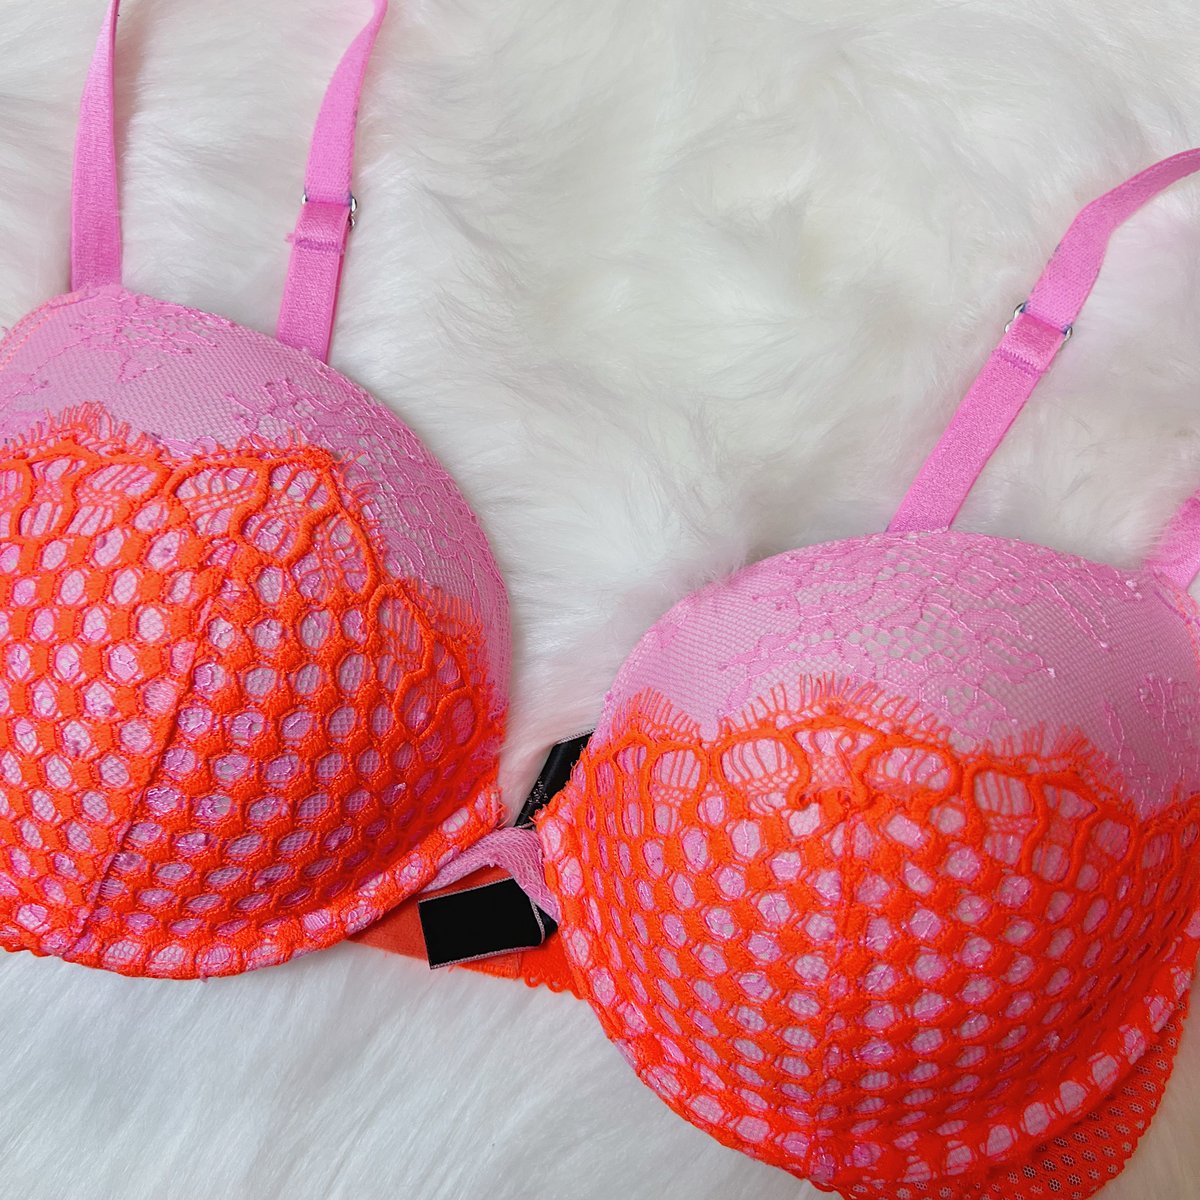 Victoria secret pink bra size 36c #CarouStyle, Women's Fashion